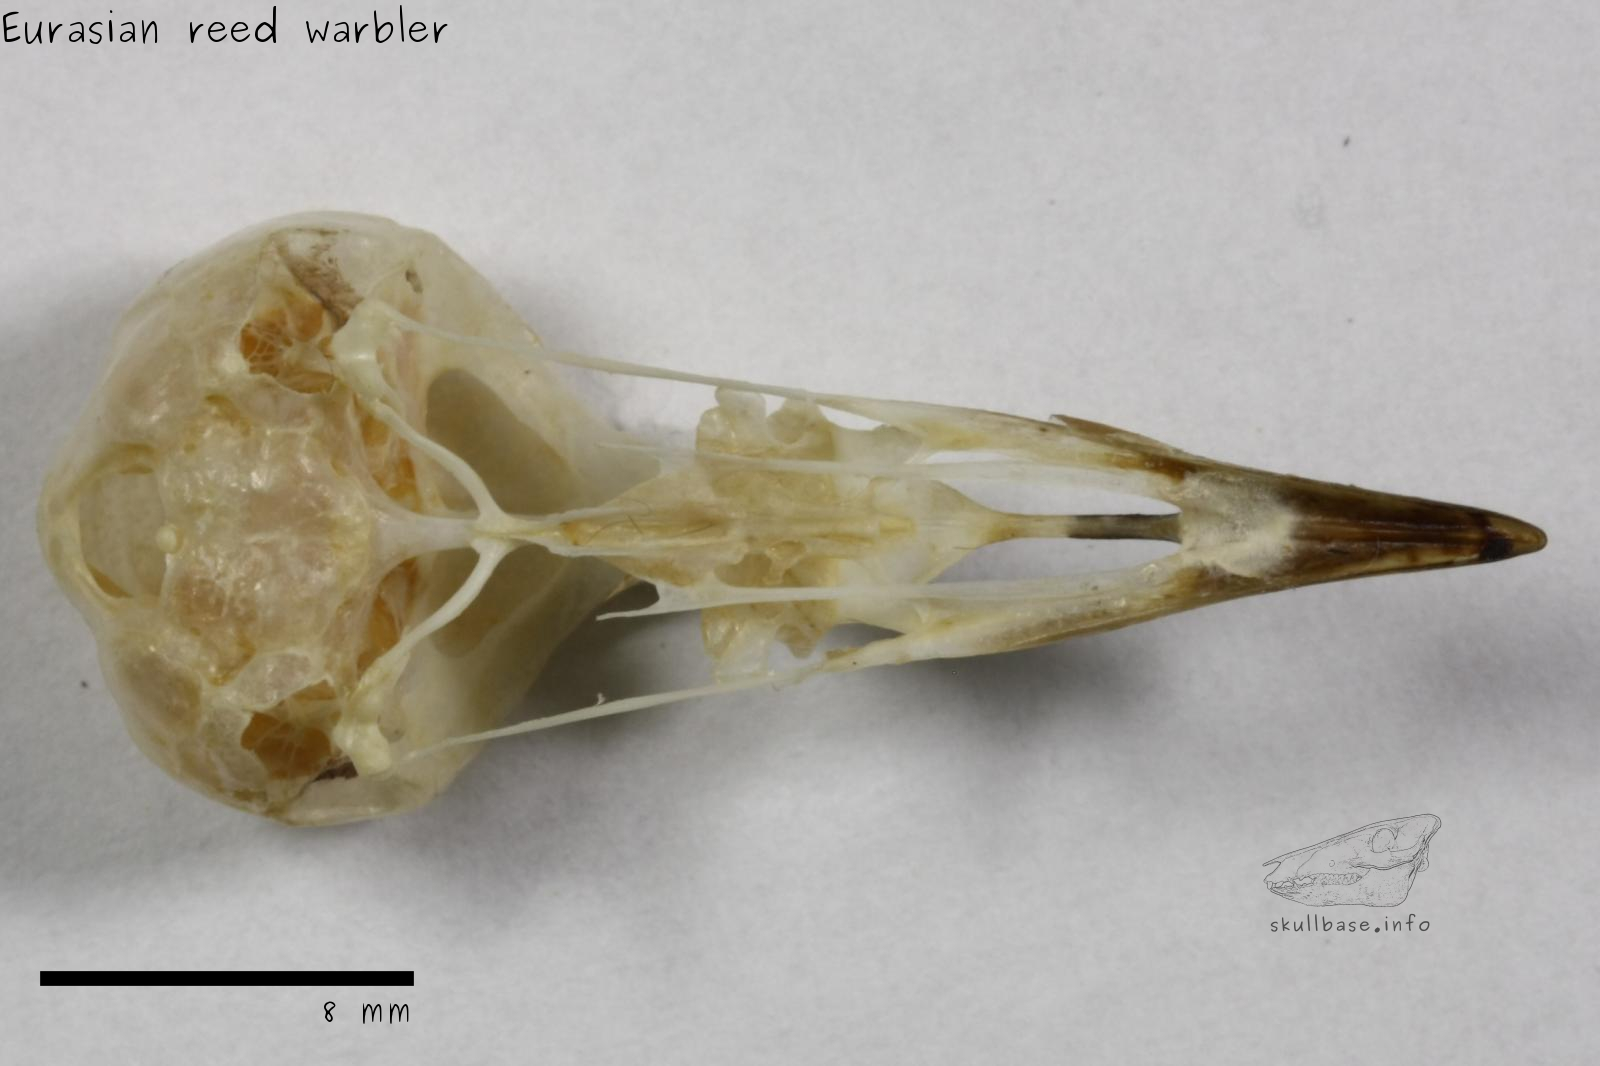 Eurasian reed warbler (Acrocephalus scirpaceus) skull ventral view